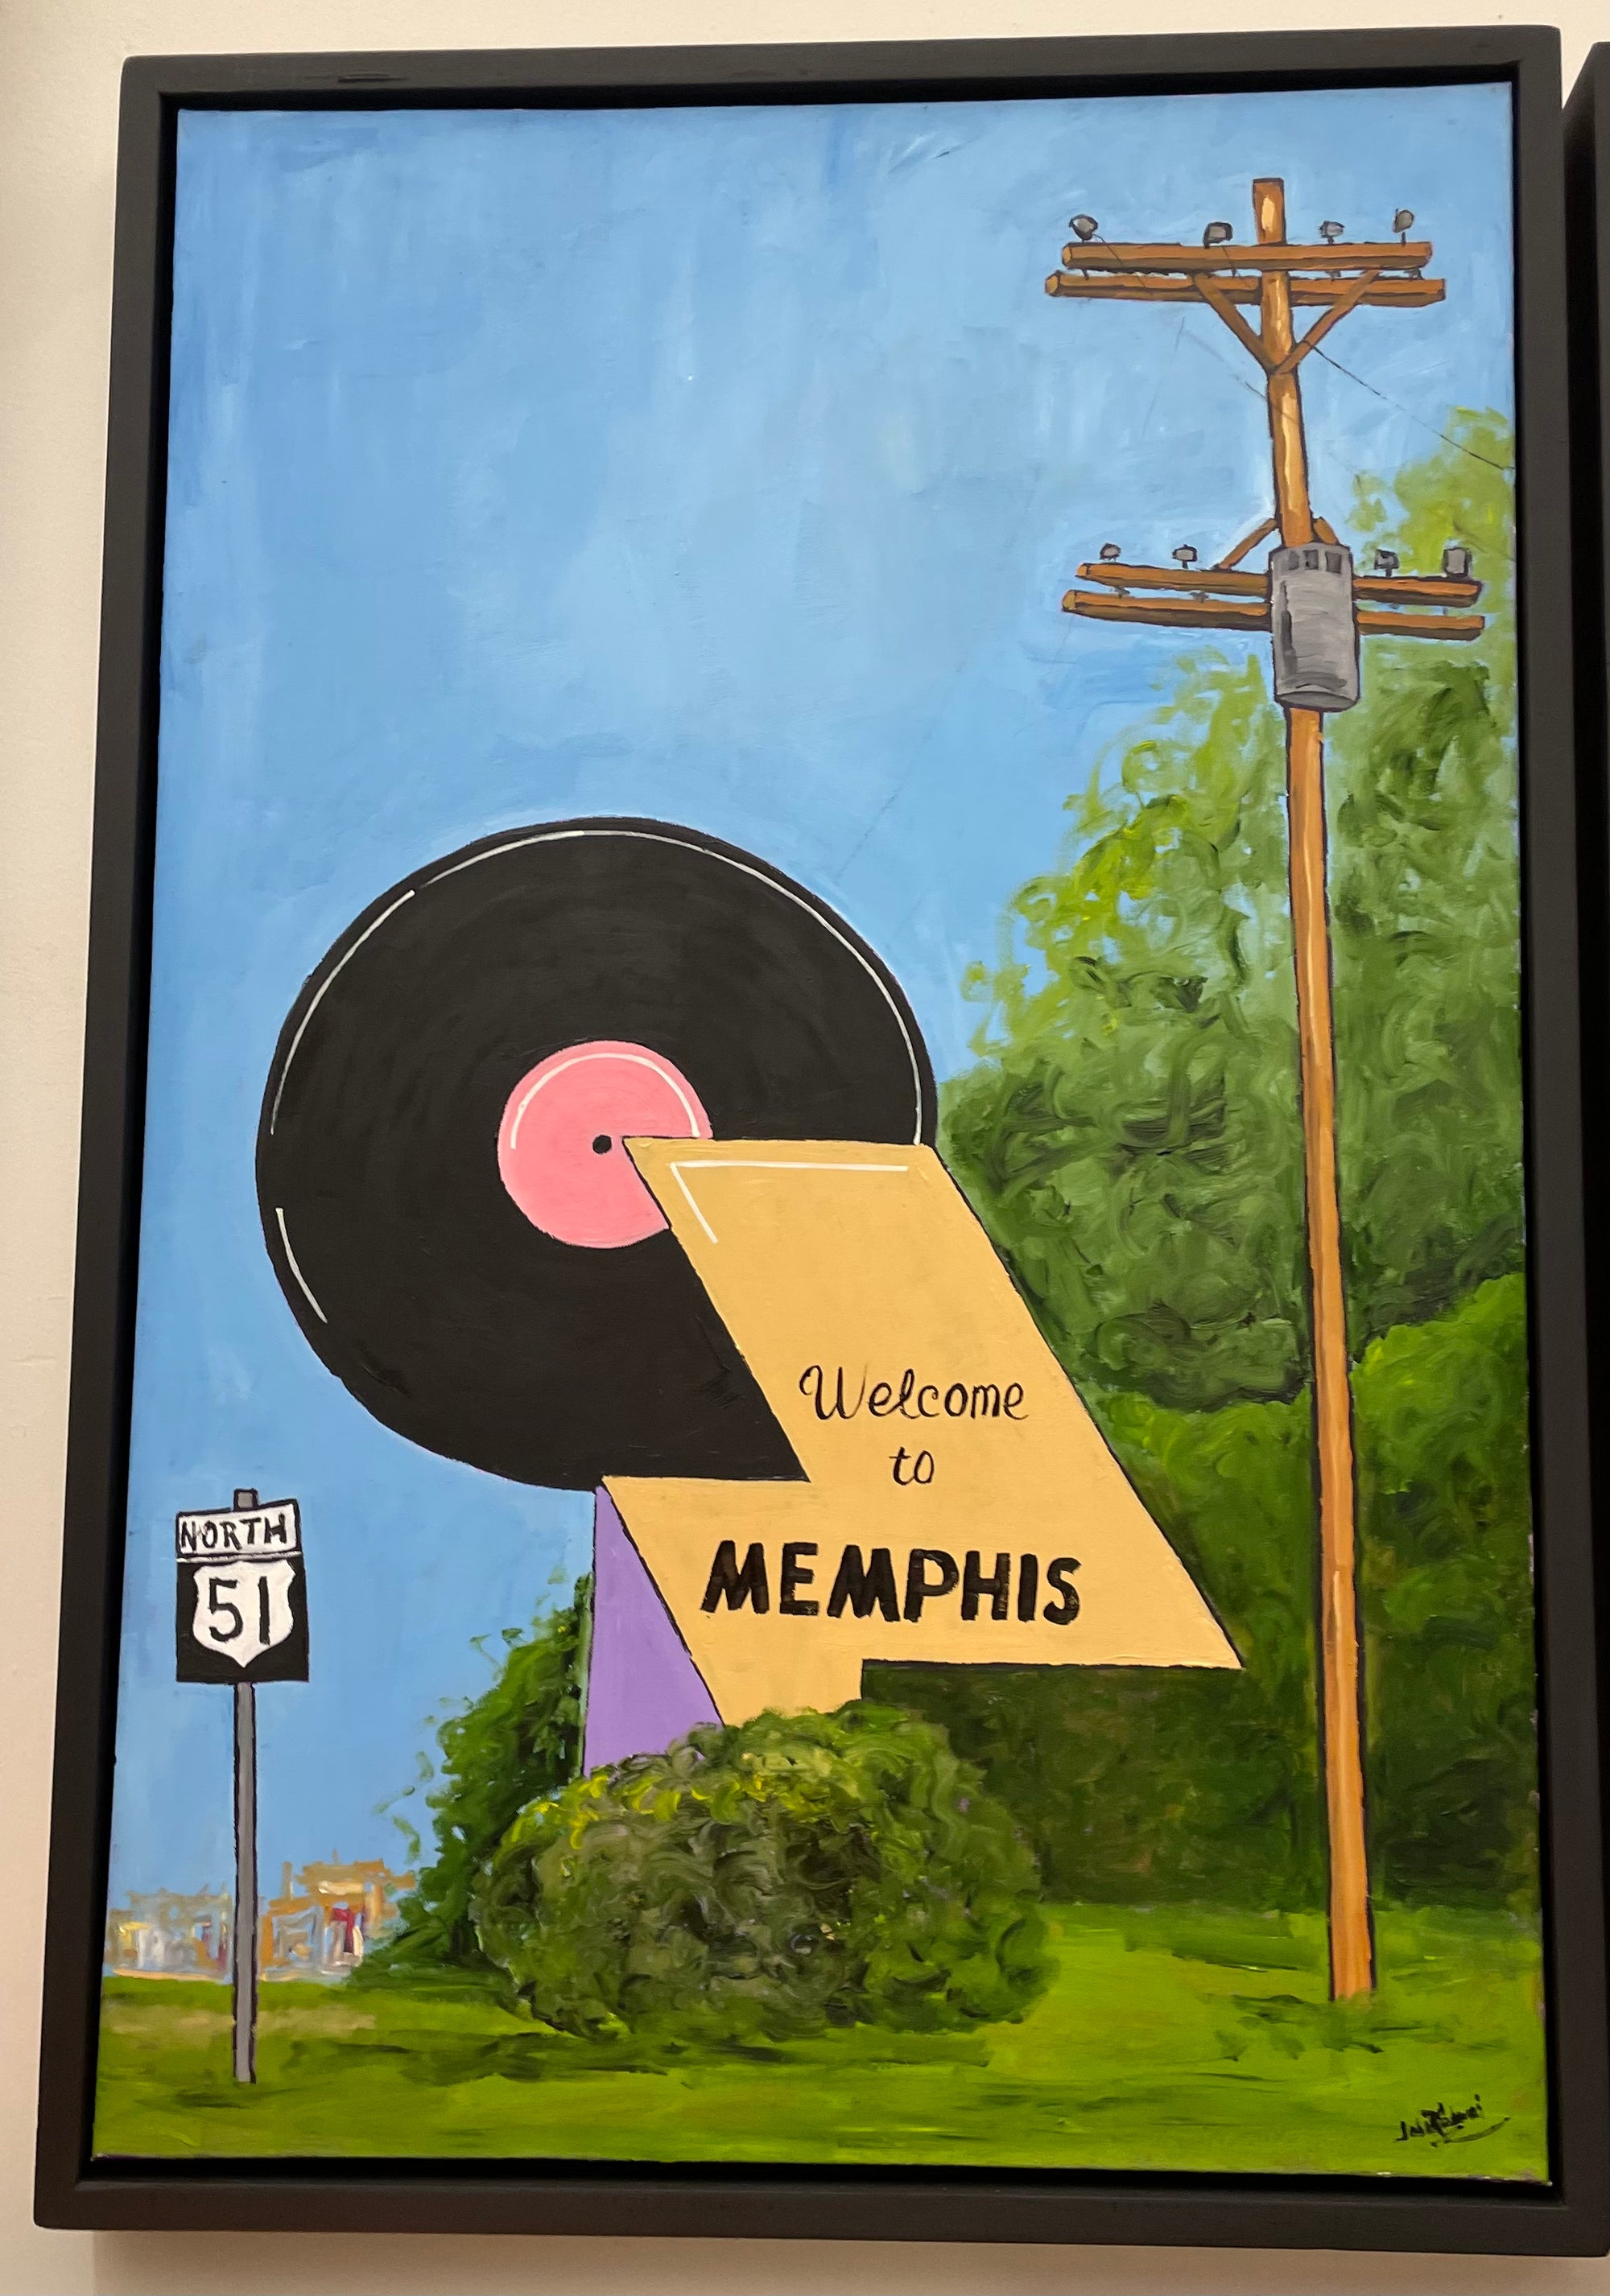 “Welcome to Memphis” by John Sadowski